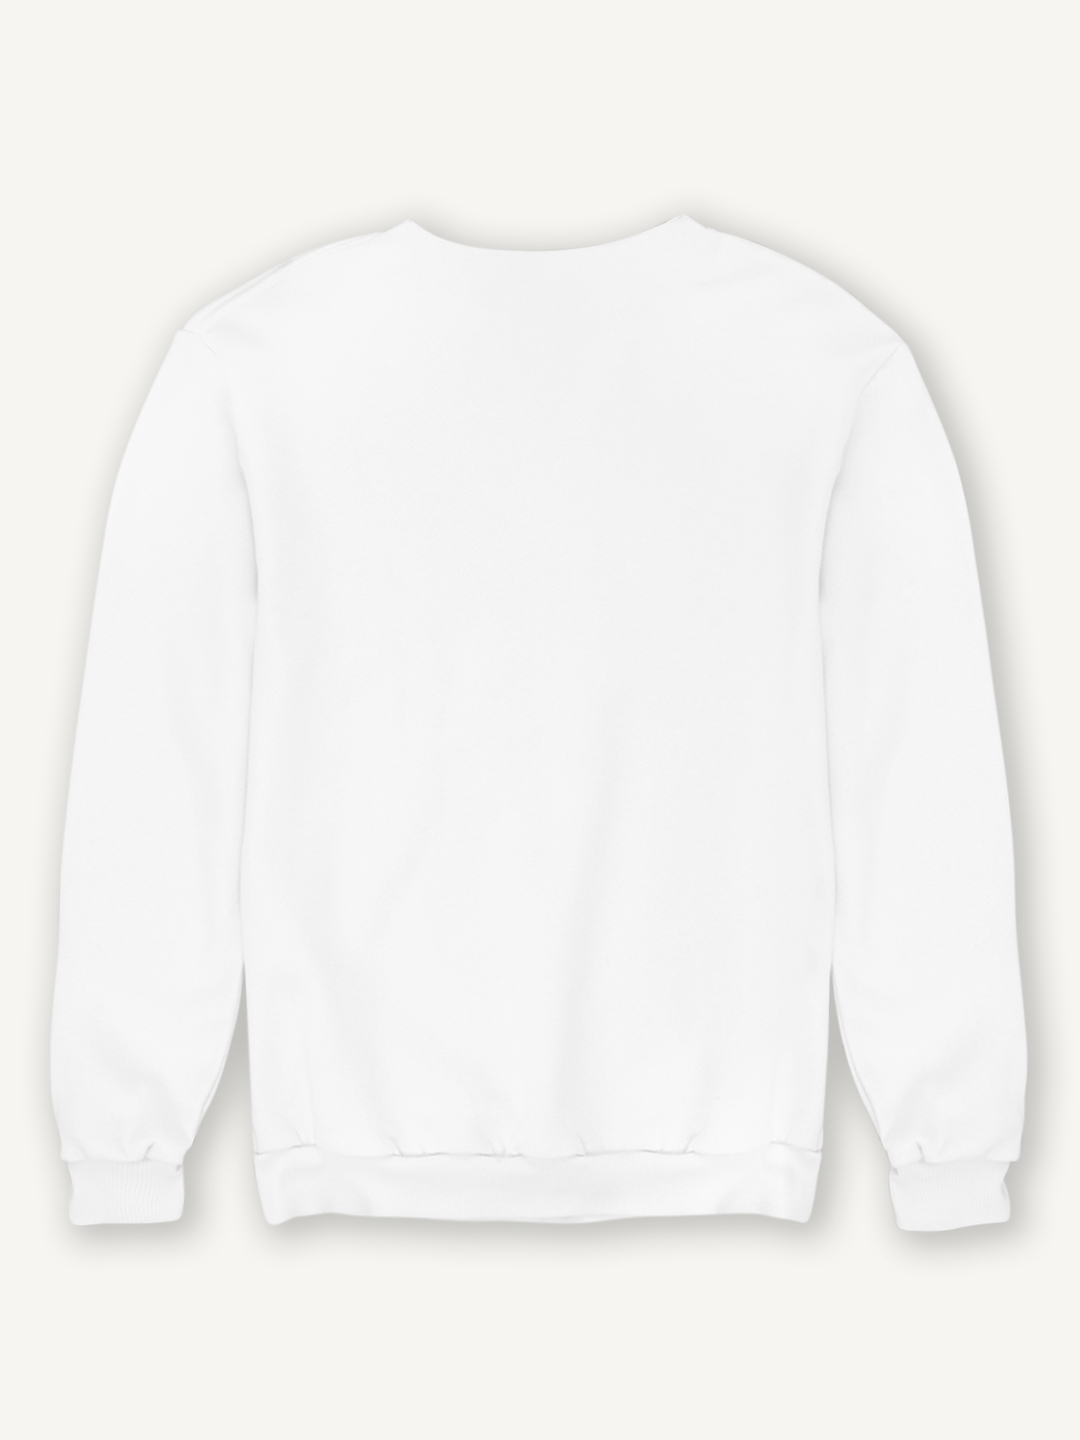 Christmas Reindeer White Unisex Cotton Sweatshirt